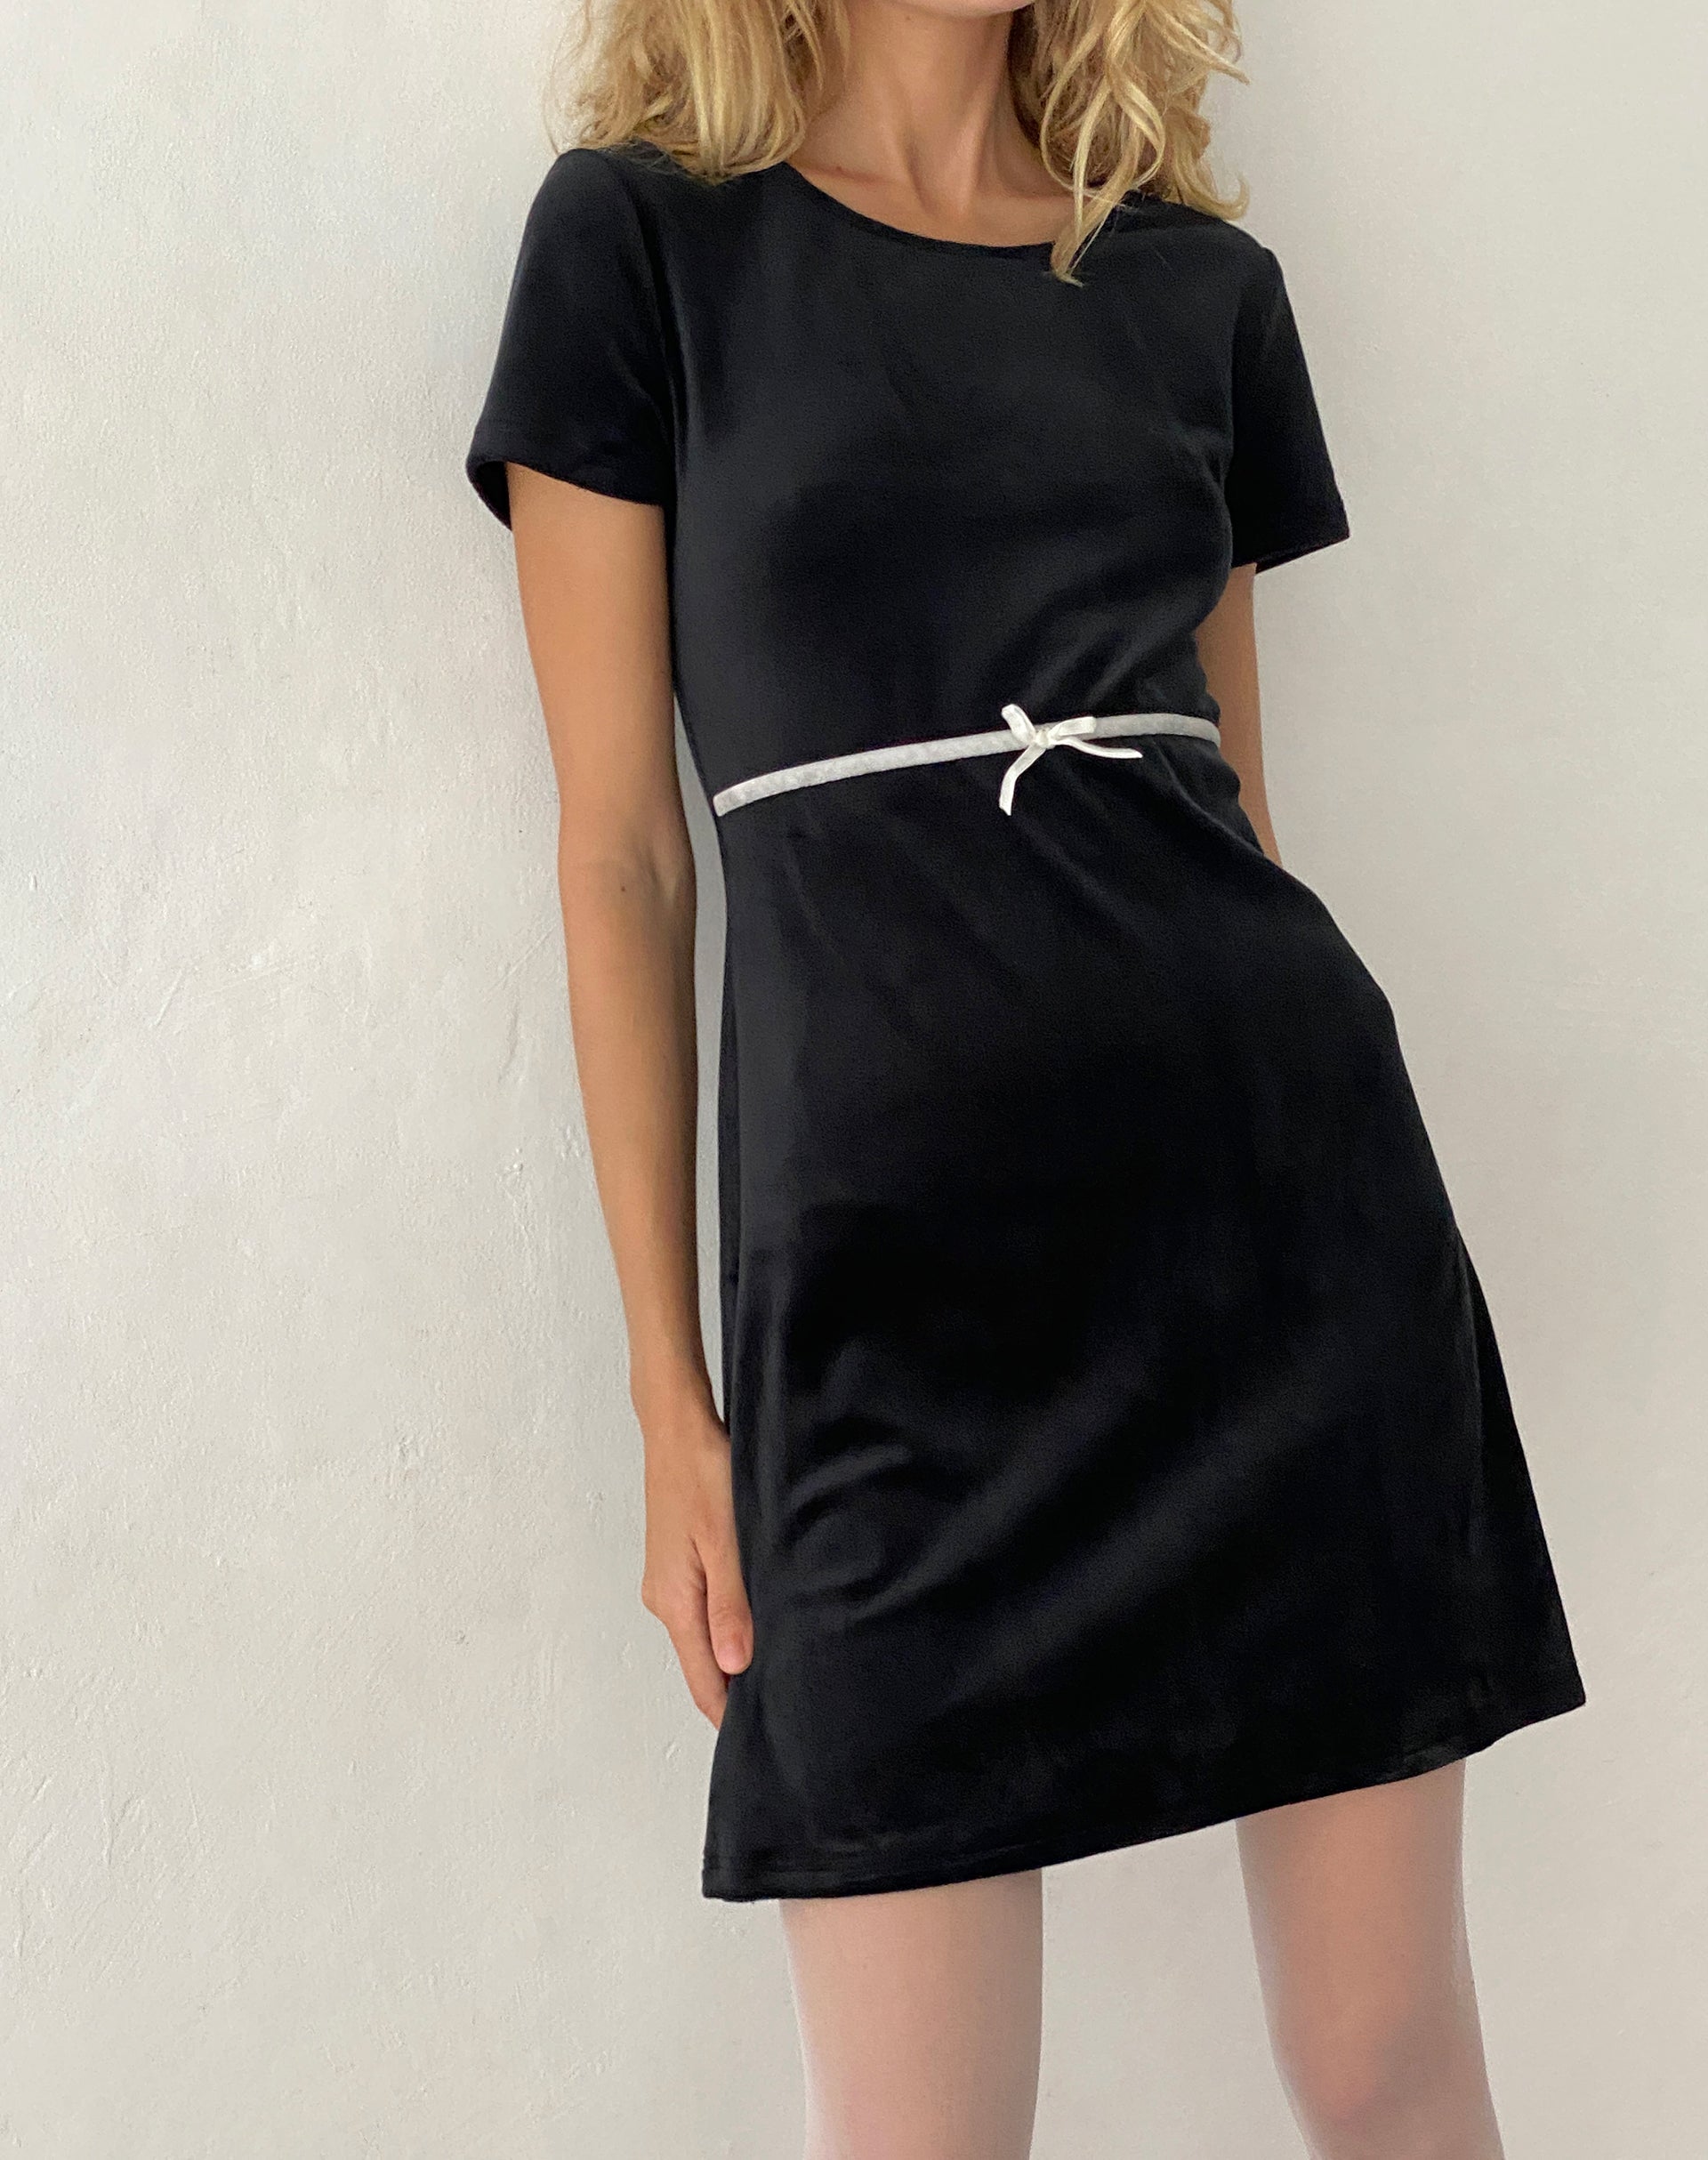 Image of Amanda Mini Dress in Black Velvet with White Trim and Bow